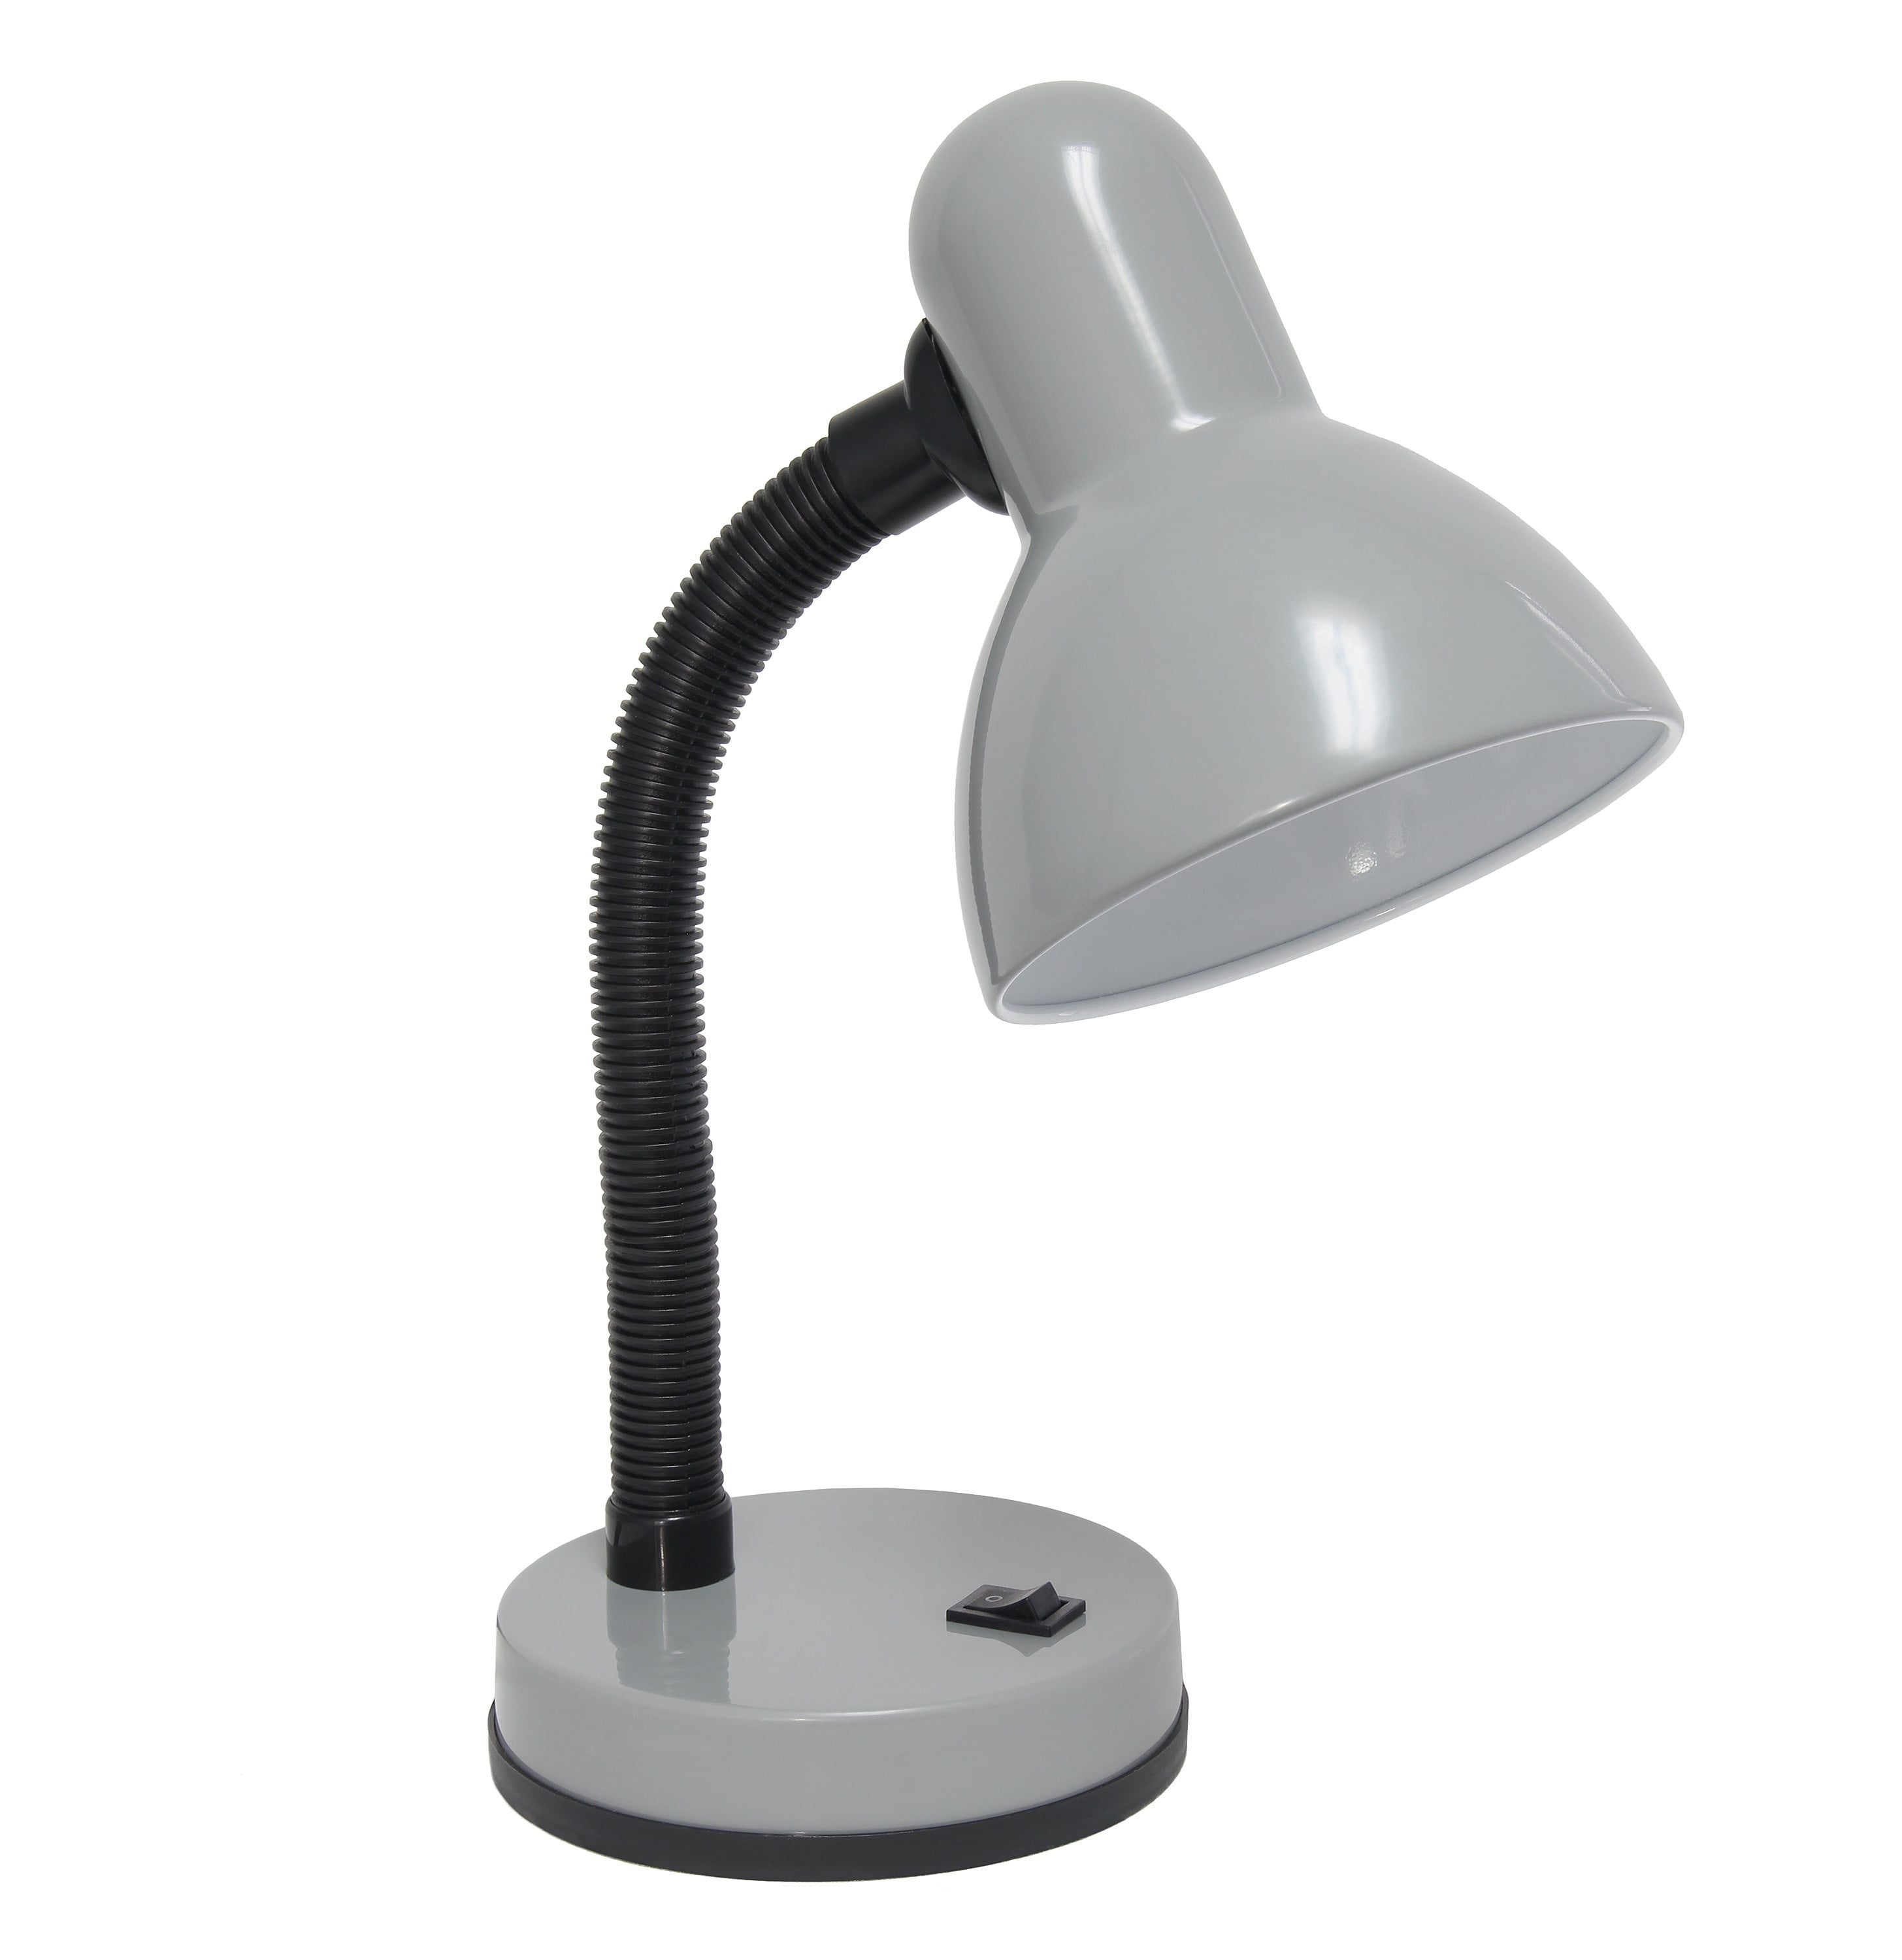 Ld1003-slv Basic Metal Desk Table Lamp With Flexible Hose Neck, Silver